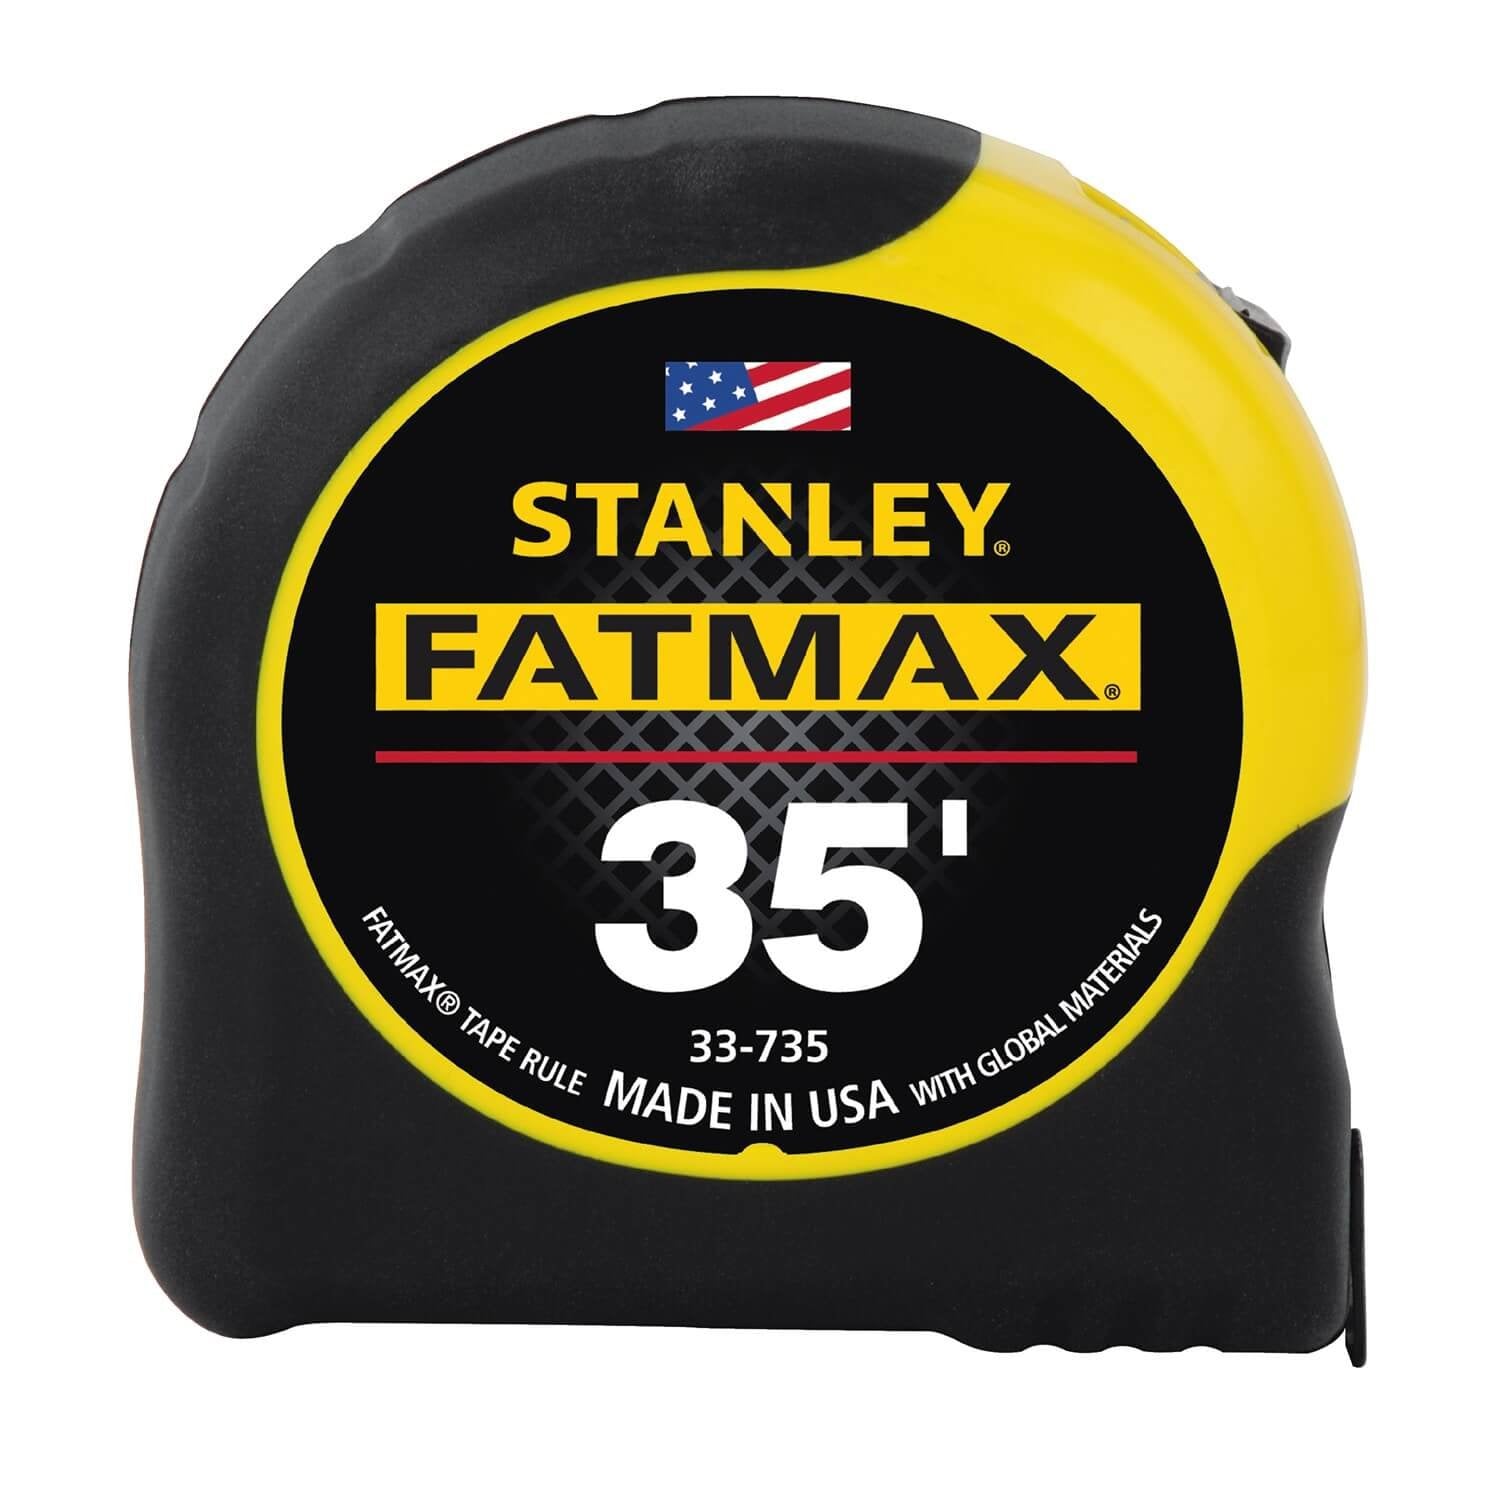 Stanley 33-735 - FATMAX 35' Tape Measure